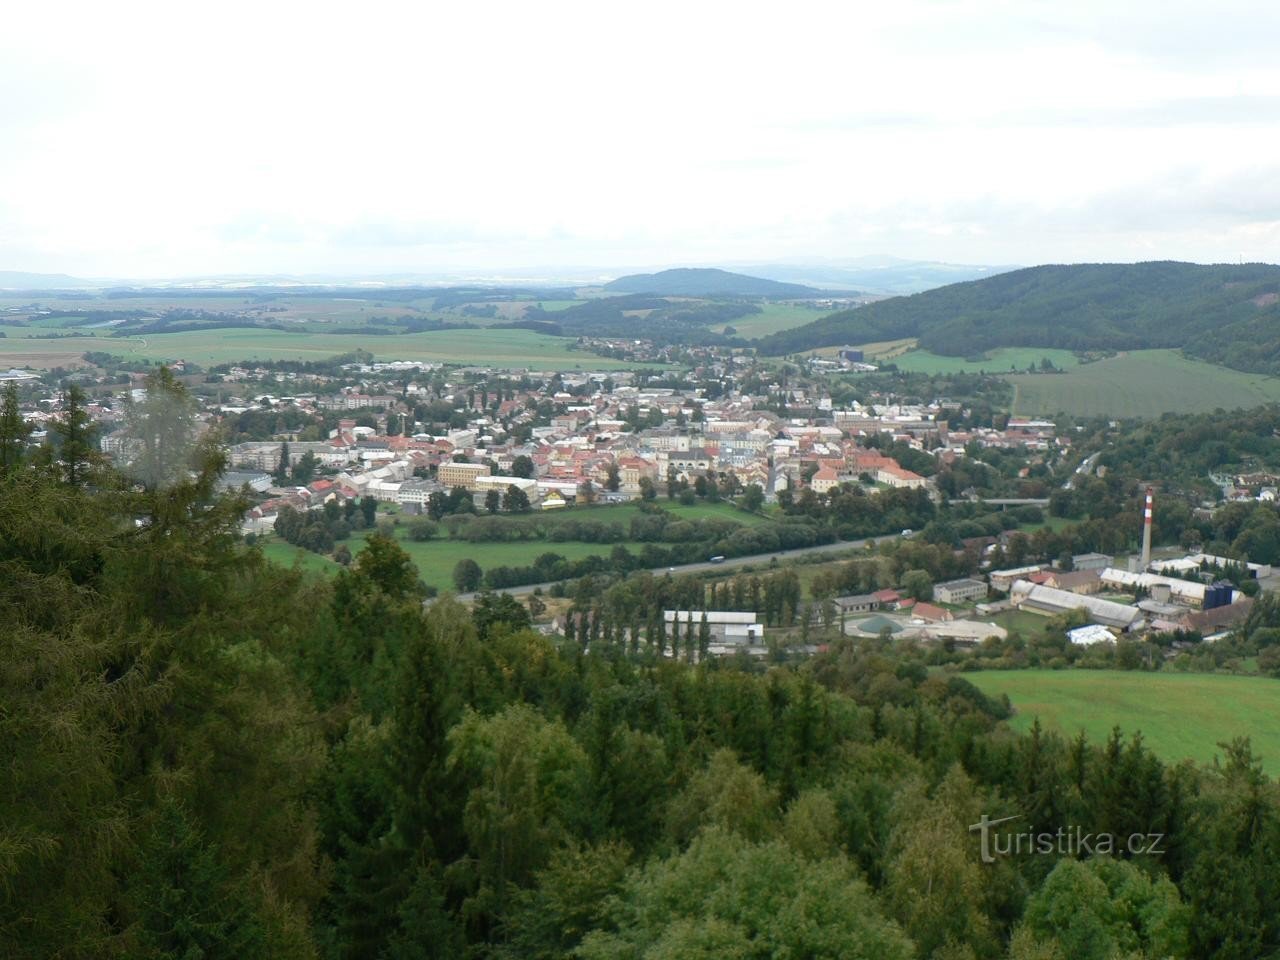 Vedere a orașului din Pastýřka